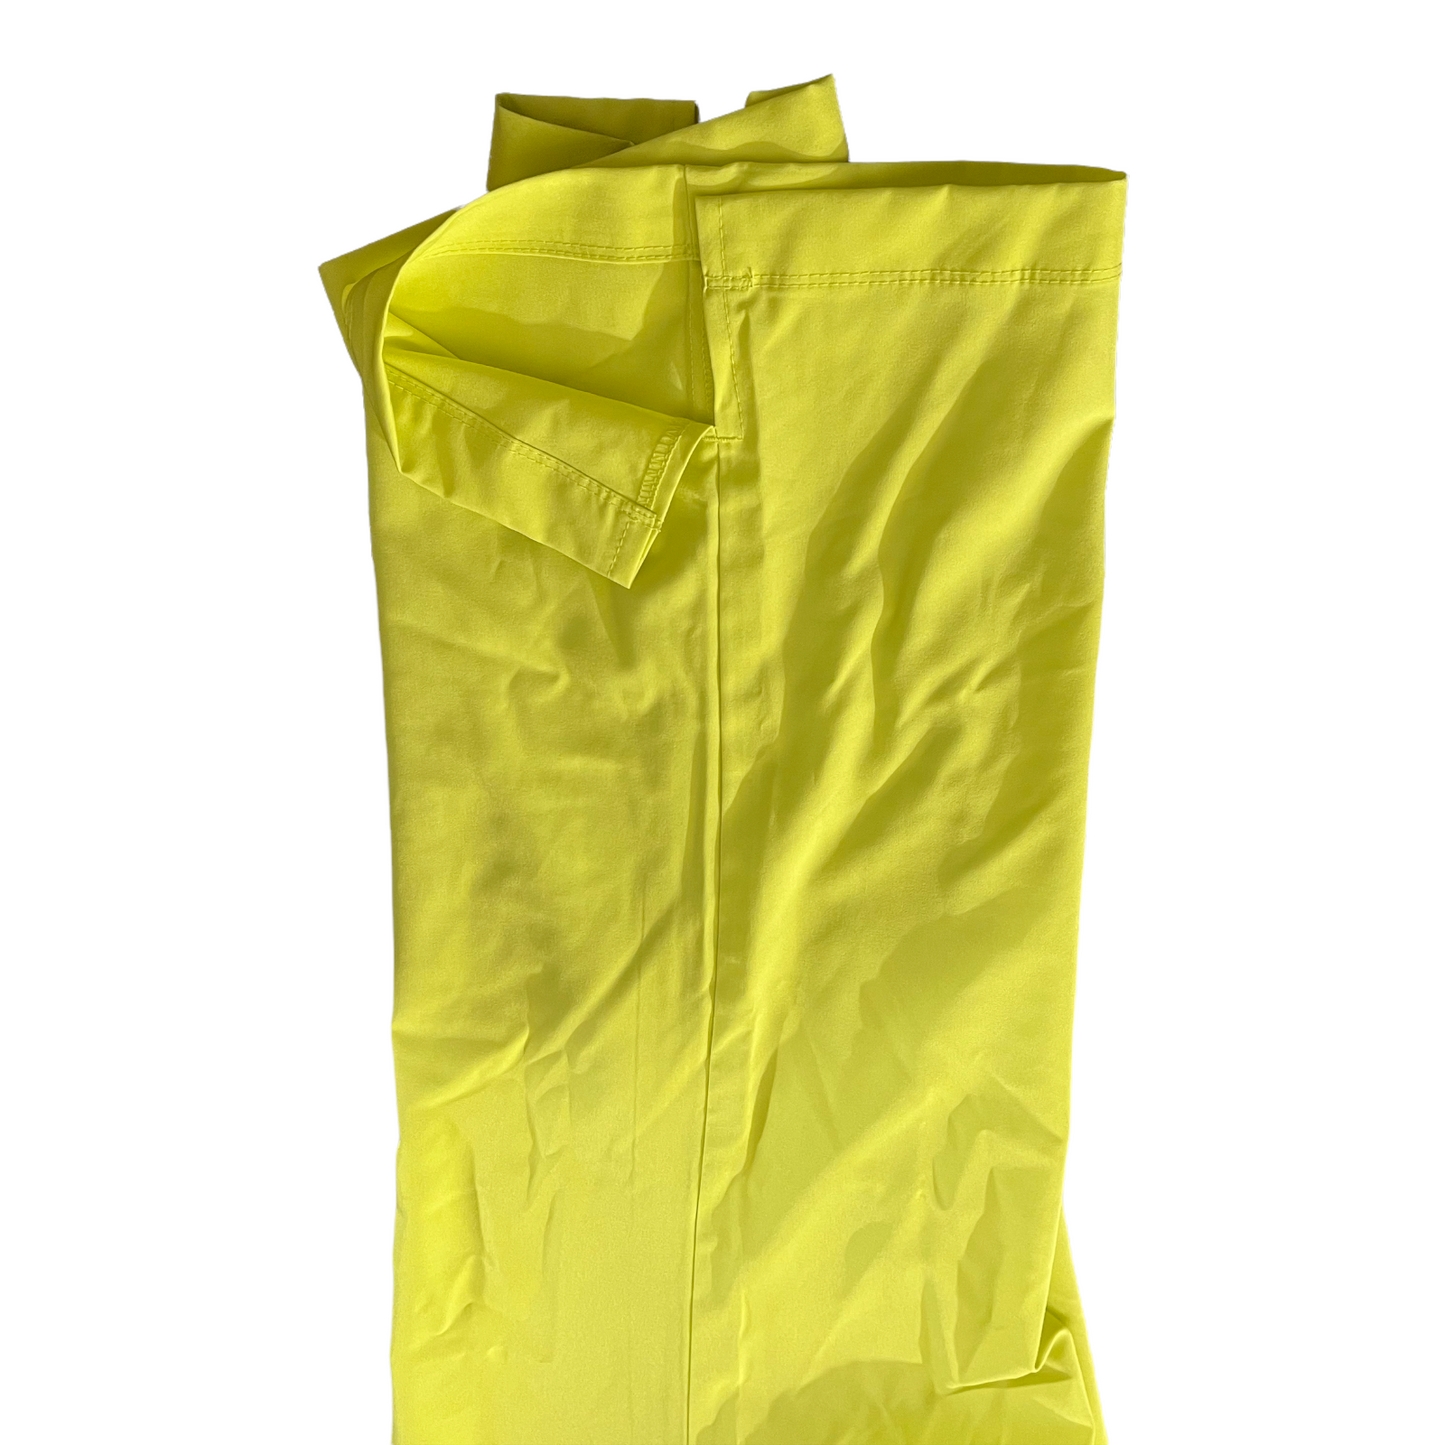 New Yellow Barco One Scrubs Drawstring Closure Size 4XL